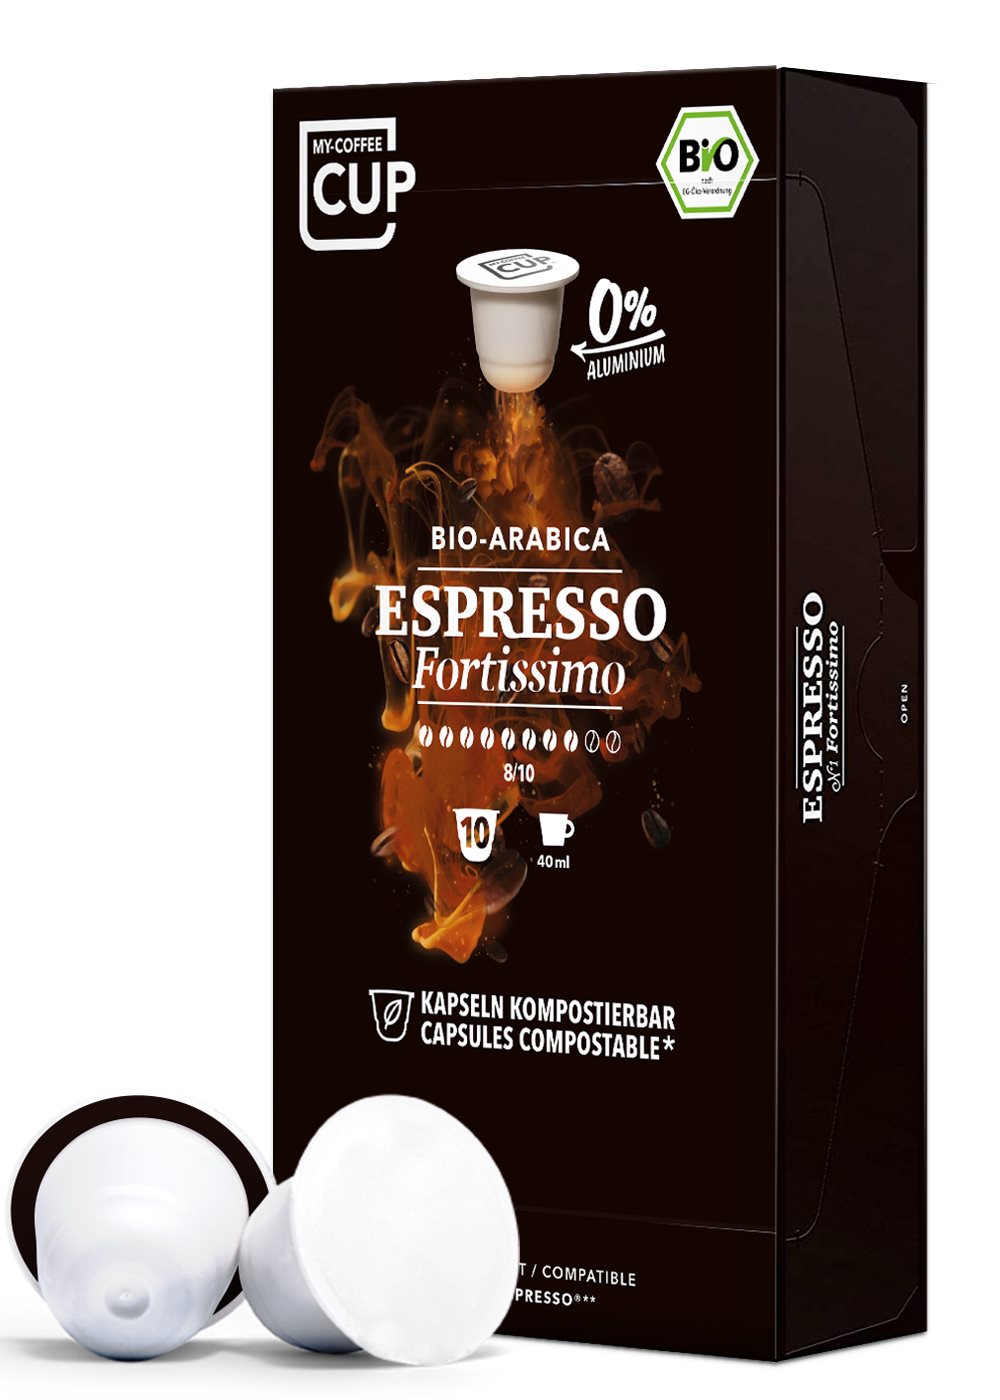 My-CoffeeCup Espresso No. 1 Fortissimo